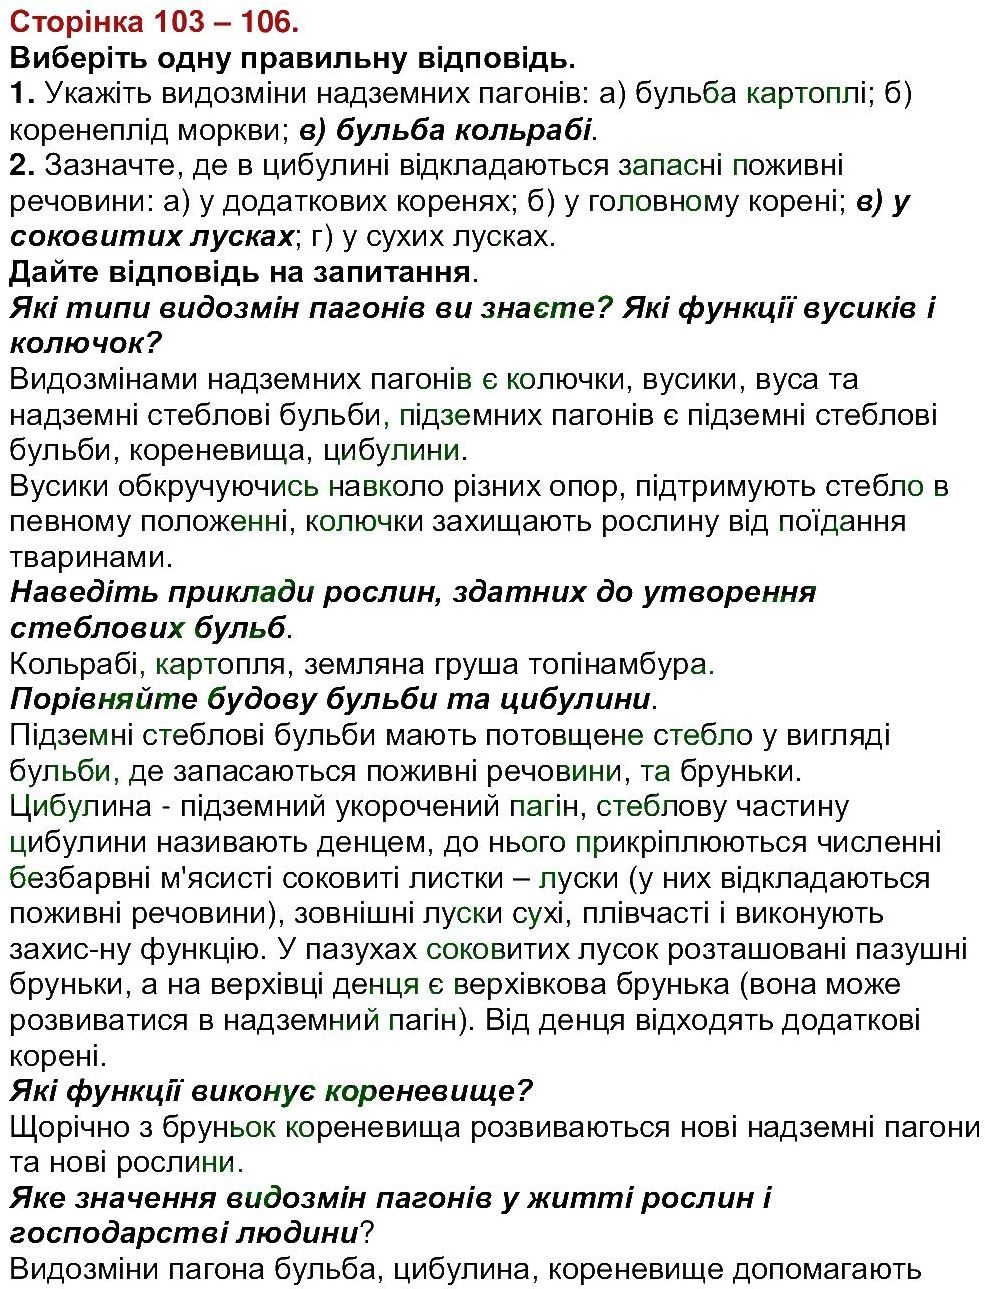 6-biologiya-li-ostapchenko-pg-balan-nyu-matyash-2016--tema-3-roslini-ст103-106.jpg